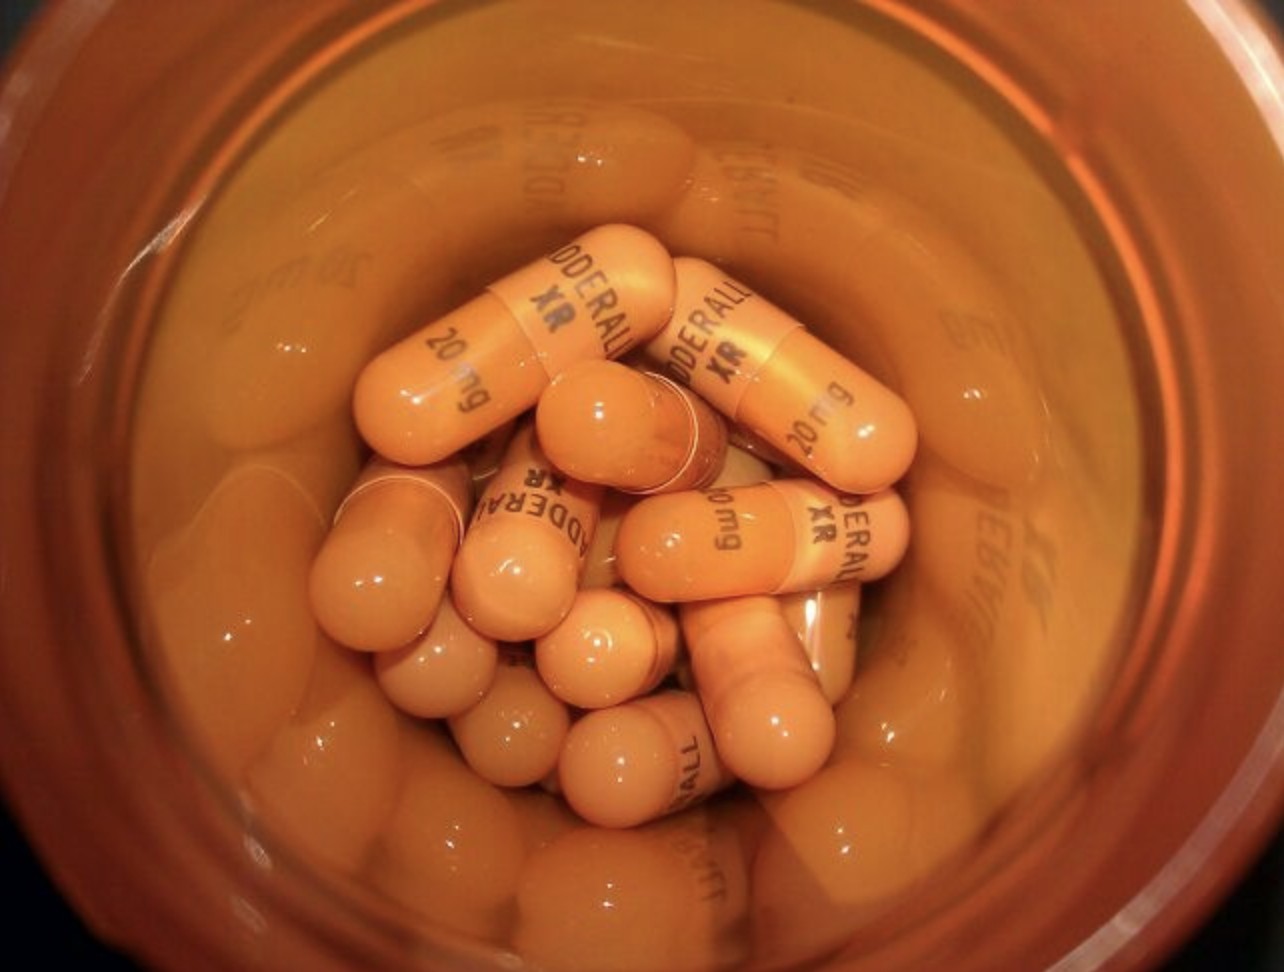 Comprimidos de Adderall, medicamento estimulante (Foto: Patrick Mallahan/ Wikimedia Commons)